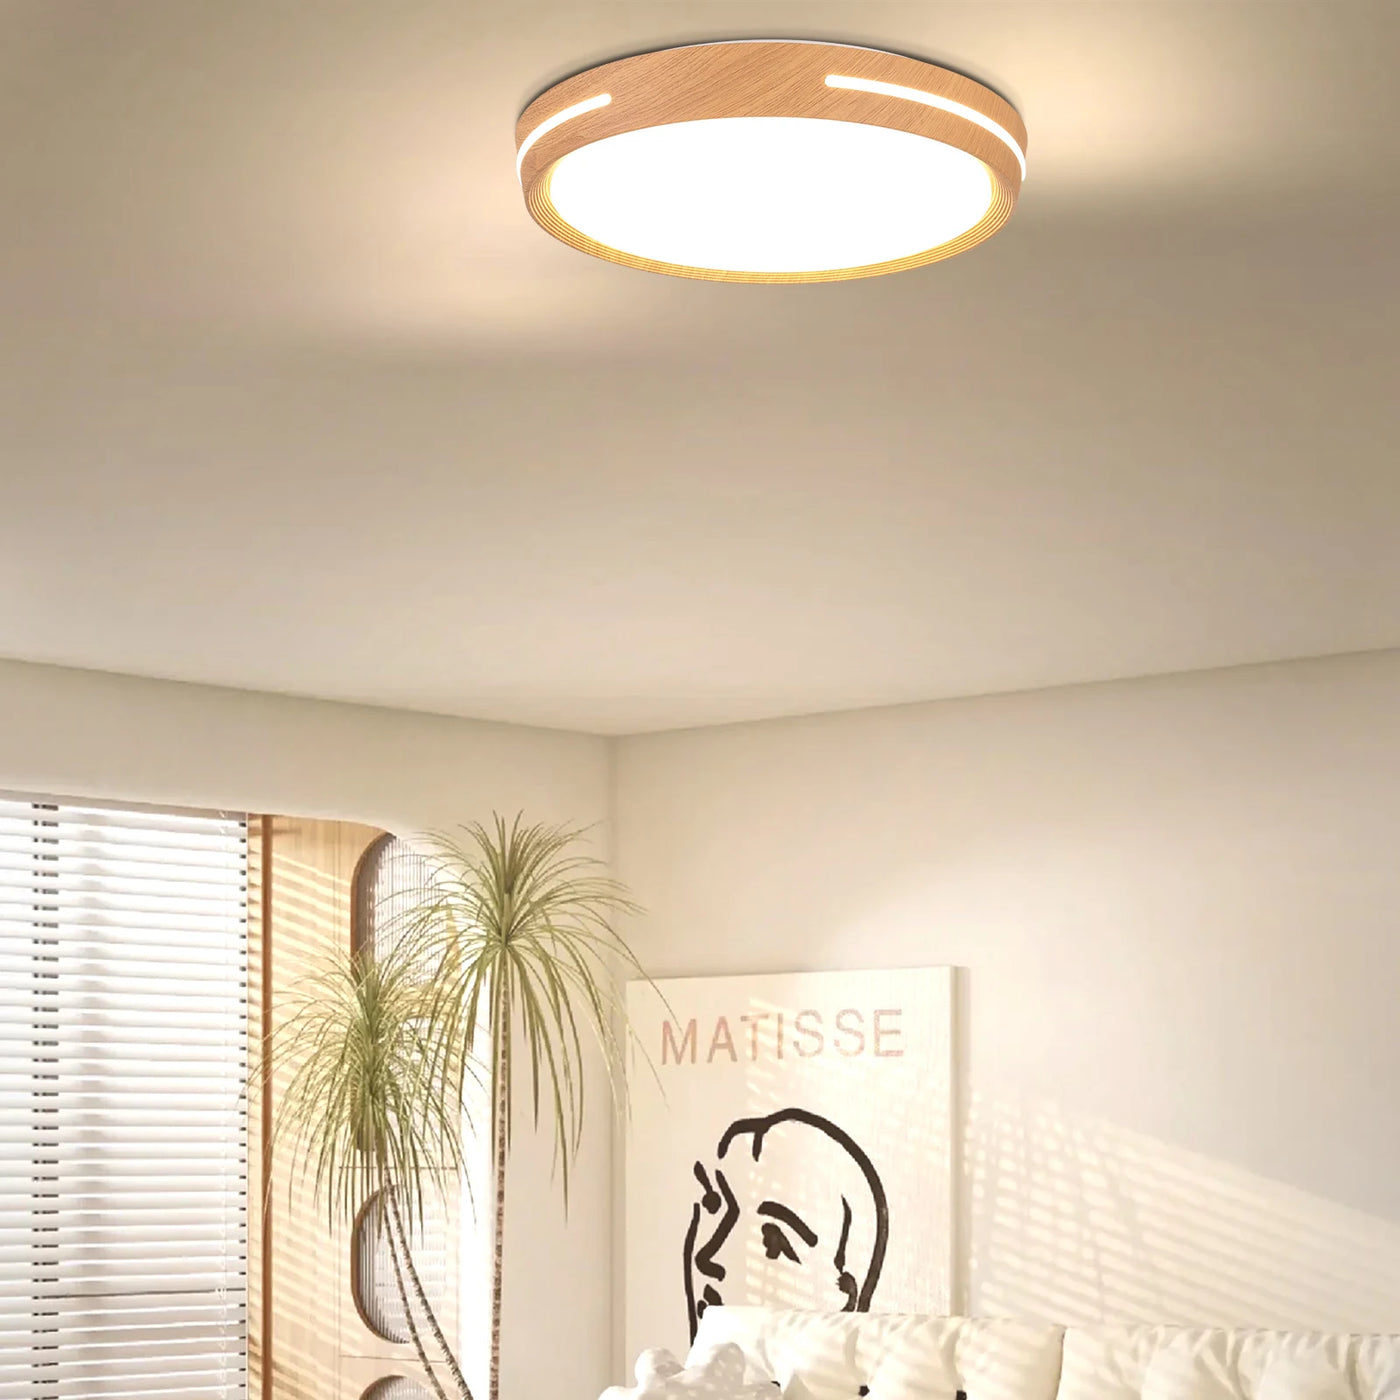 LED Chandelier Ceiling Lights Living Room For Home Fixtures Nursery Indoor Bedroom Wood Ceiling Lamp in the Hallway Modern Decor